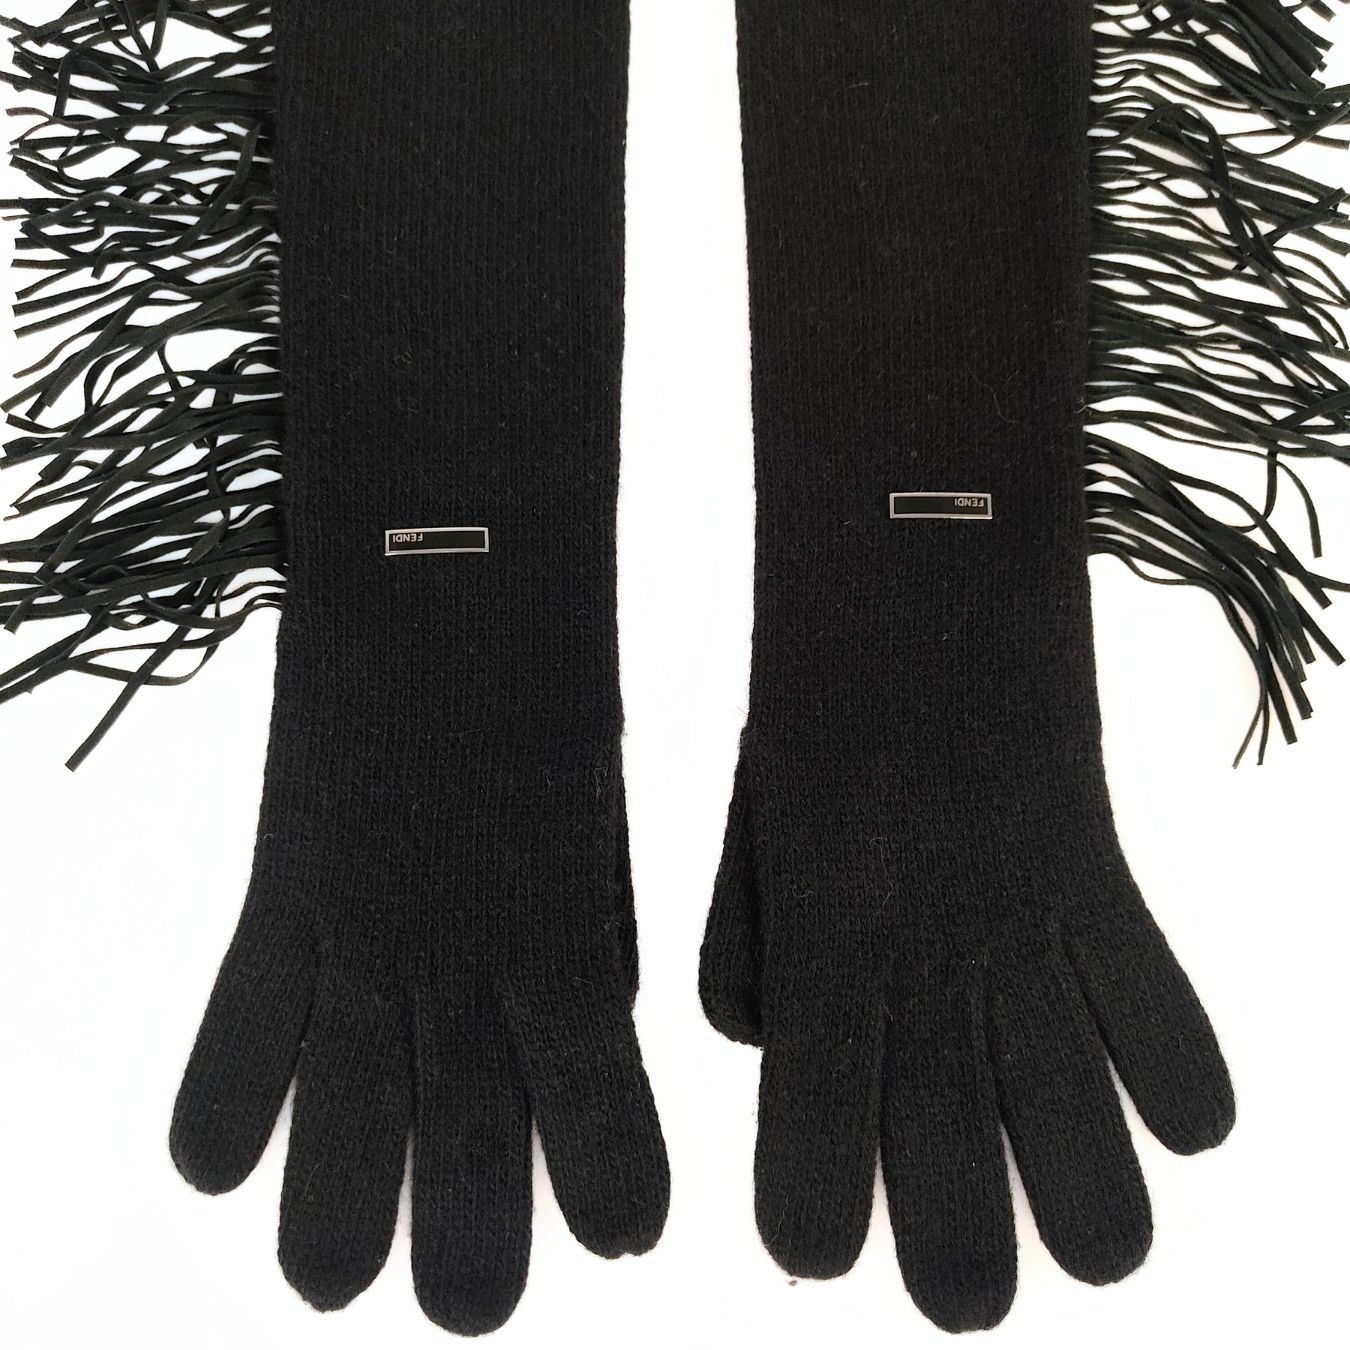 Fendi Fendi cashmere and leather long gloves - '10s